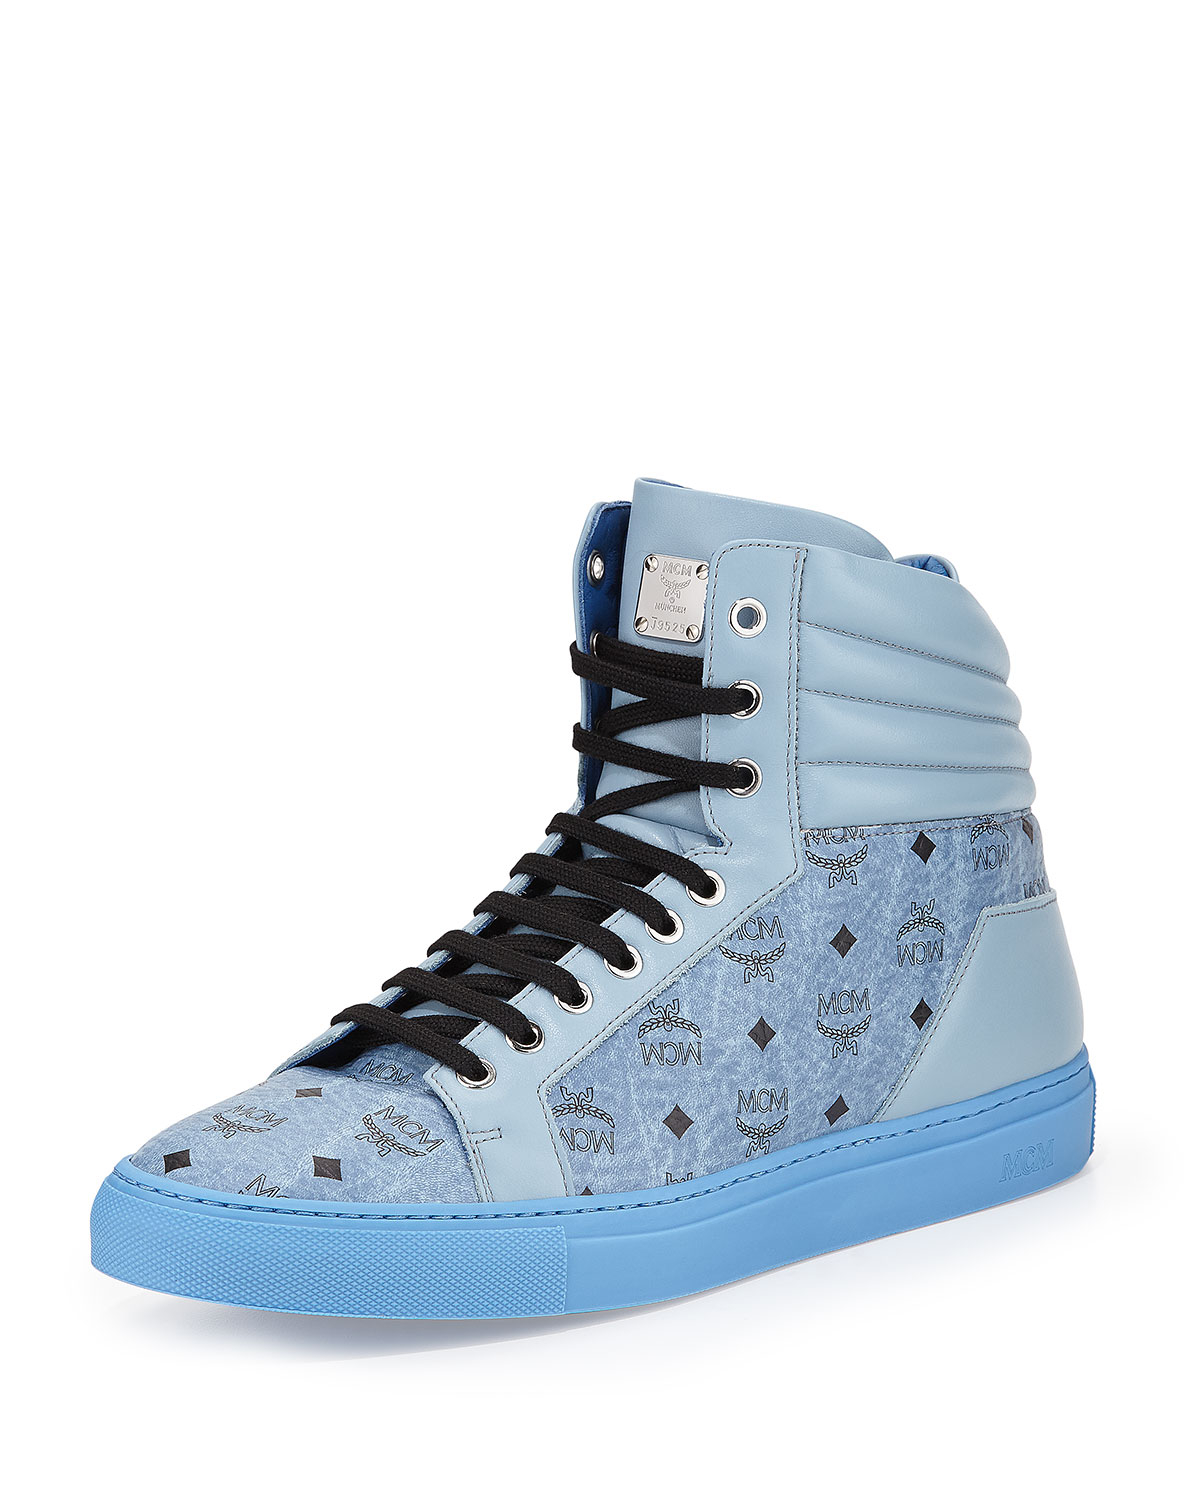 Lyst - MCM Monogrammed High-Top Sneakers in Blue for Men